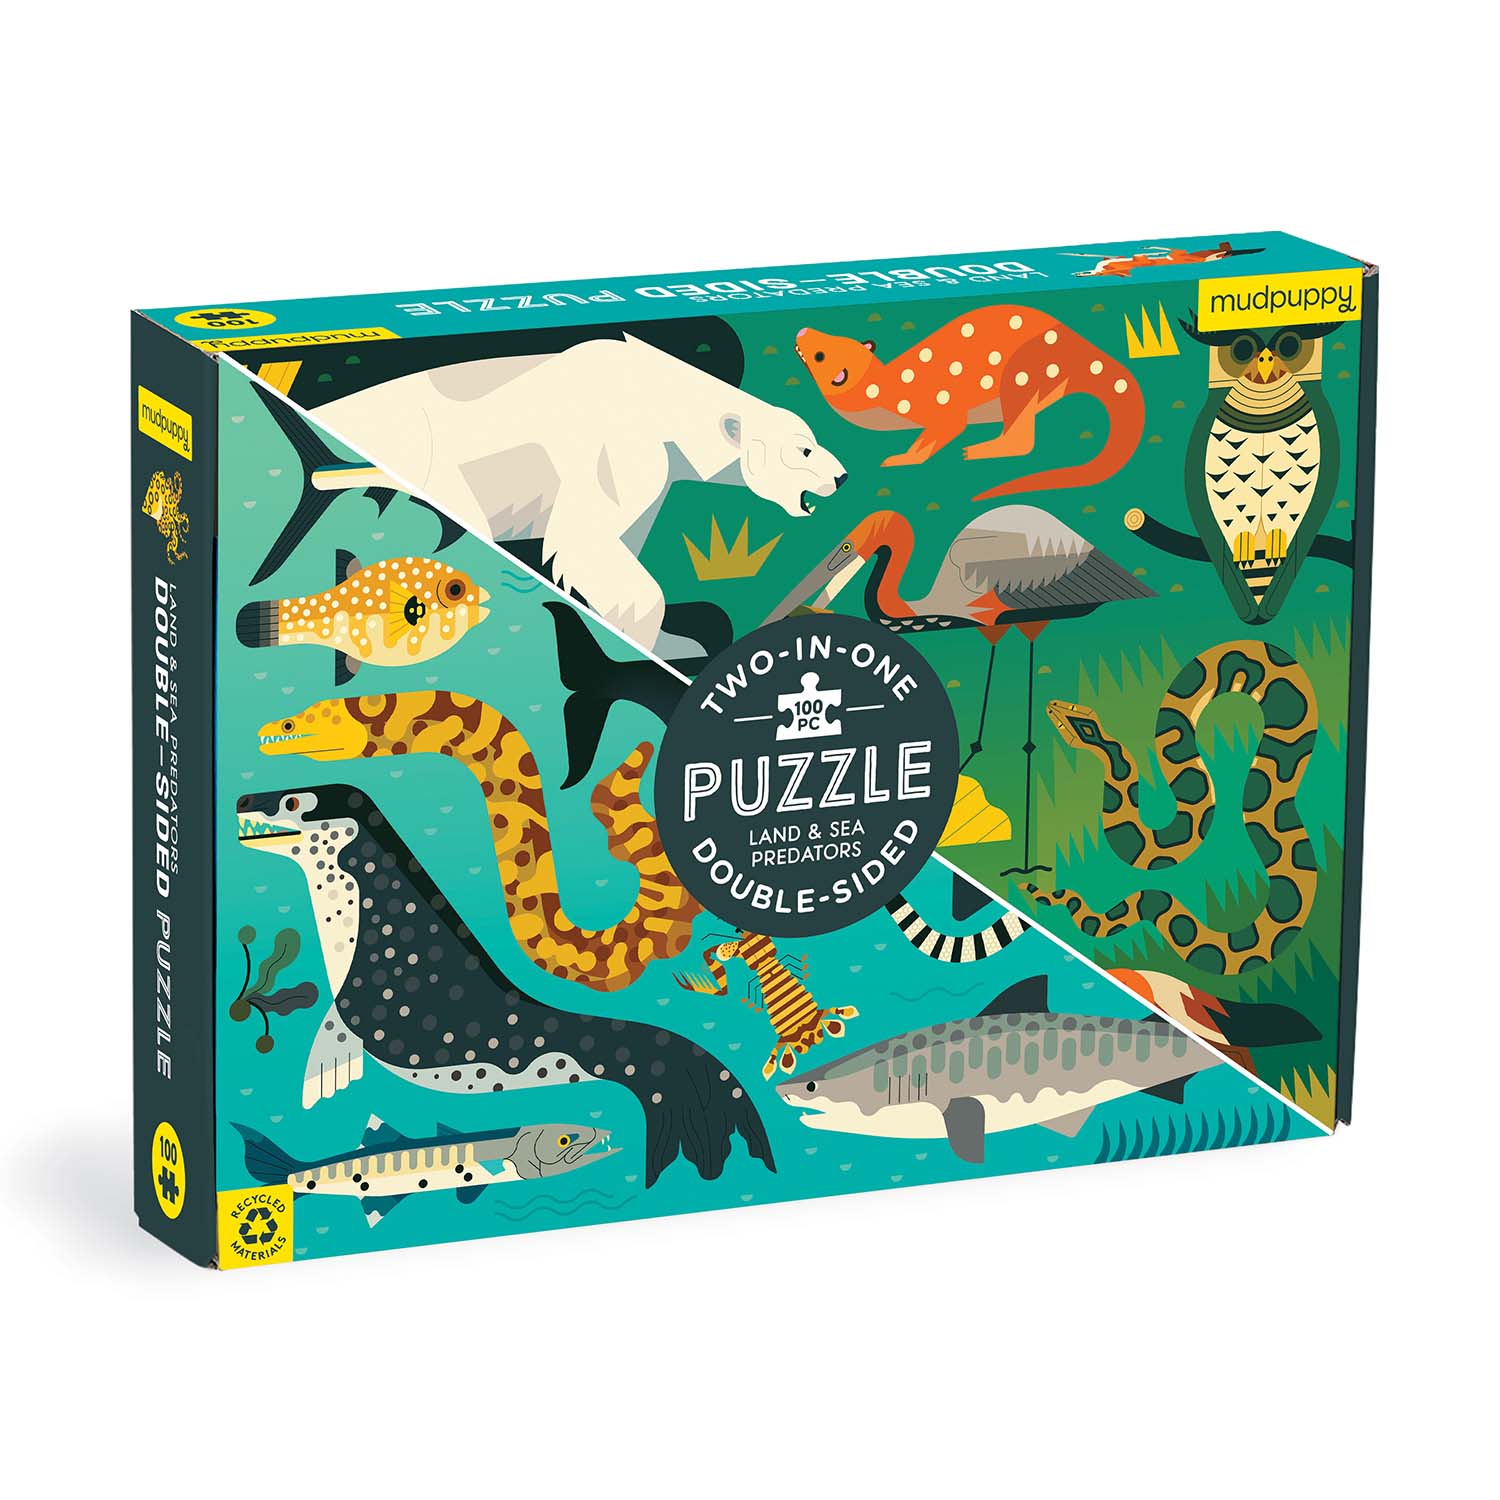 Land & Sea Predators Animals Jigsaw Puzzle